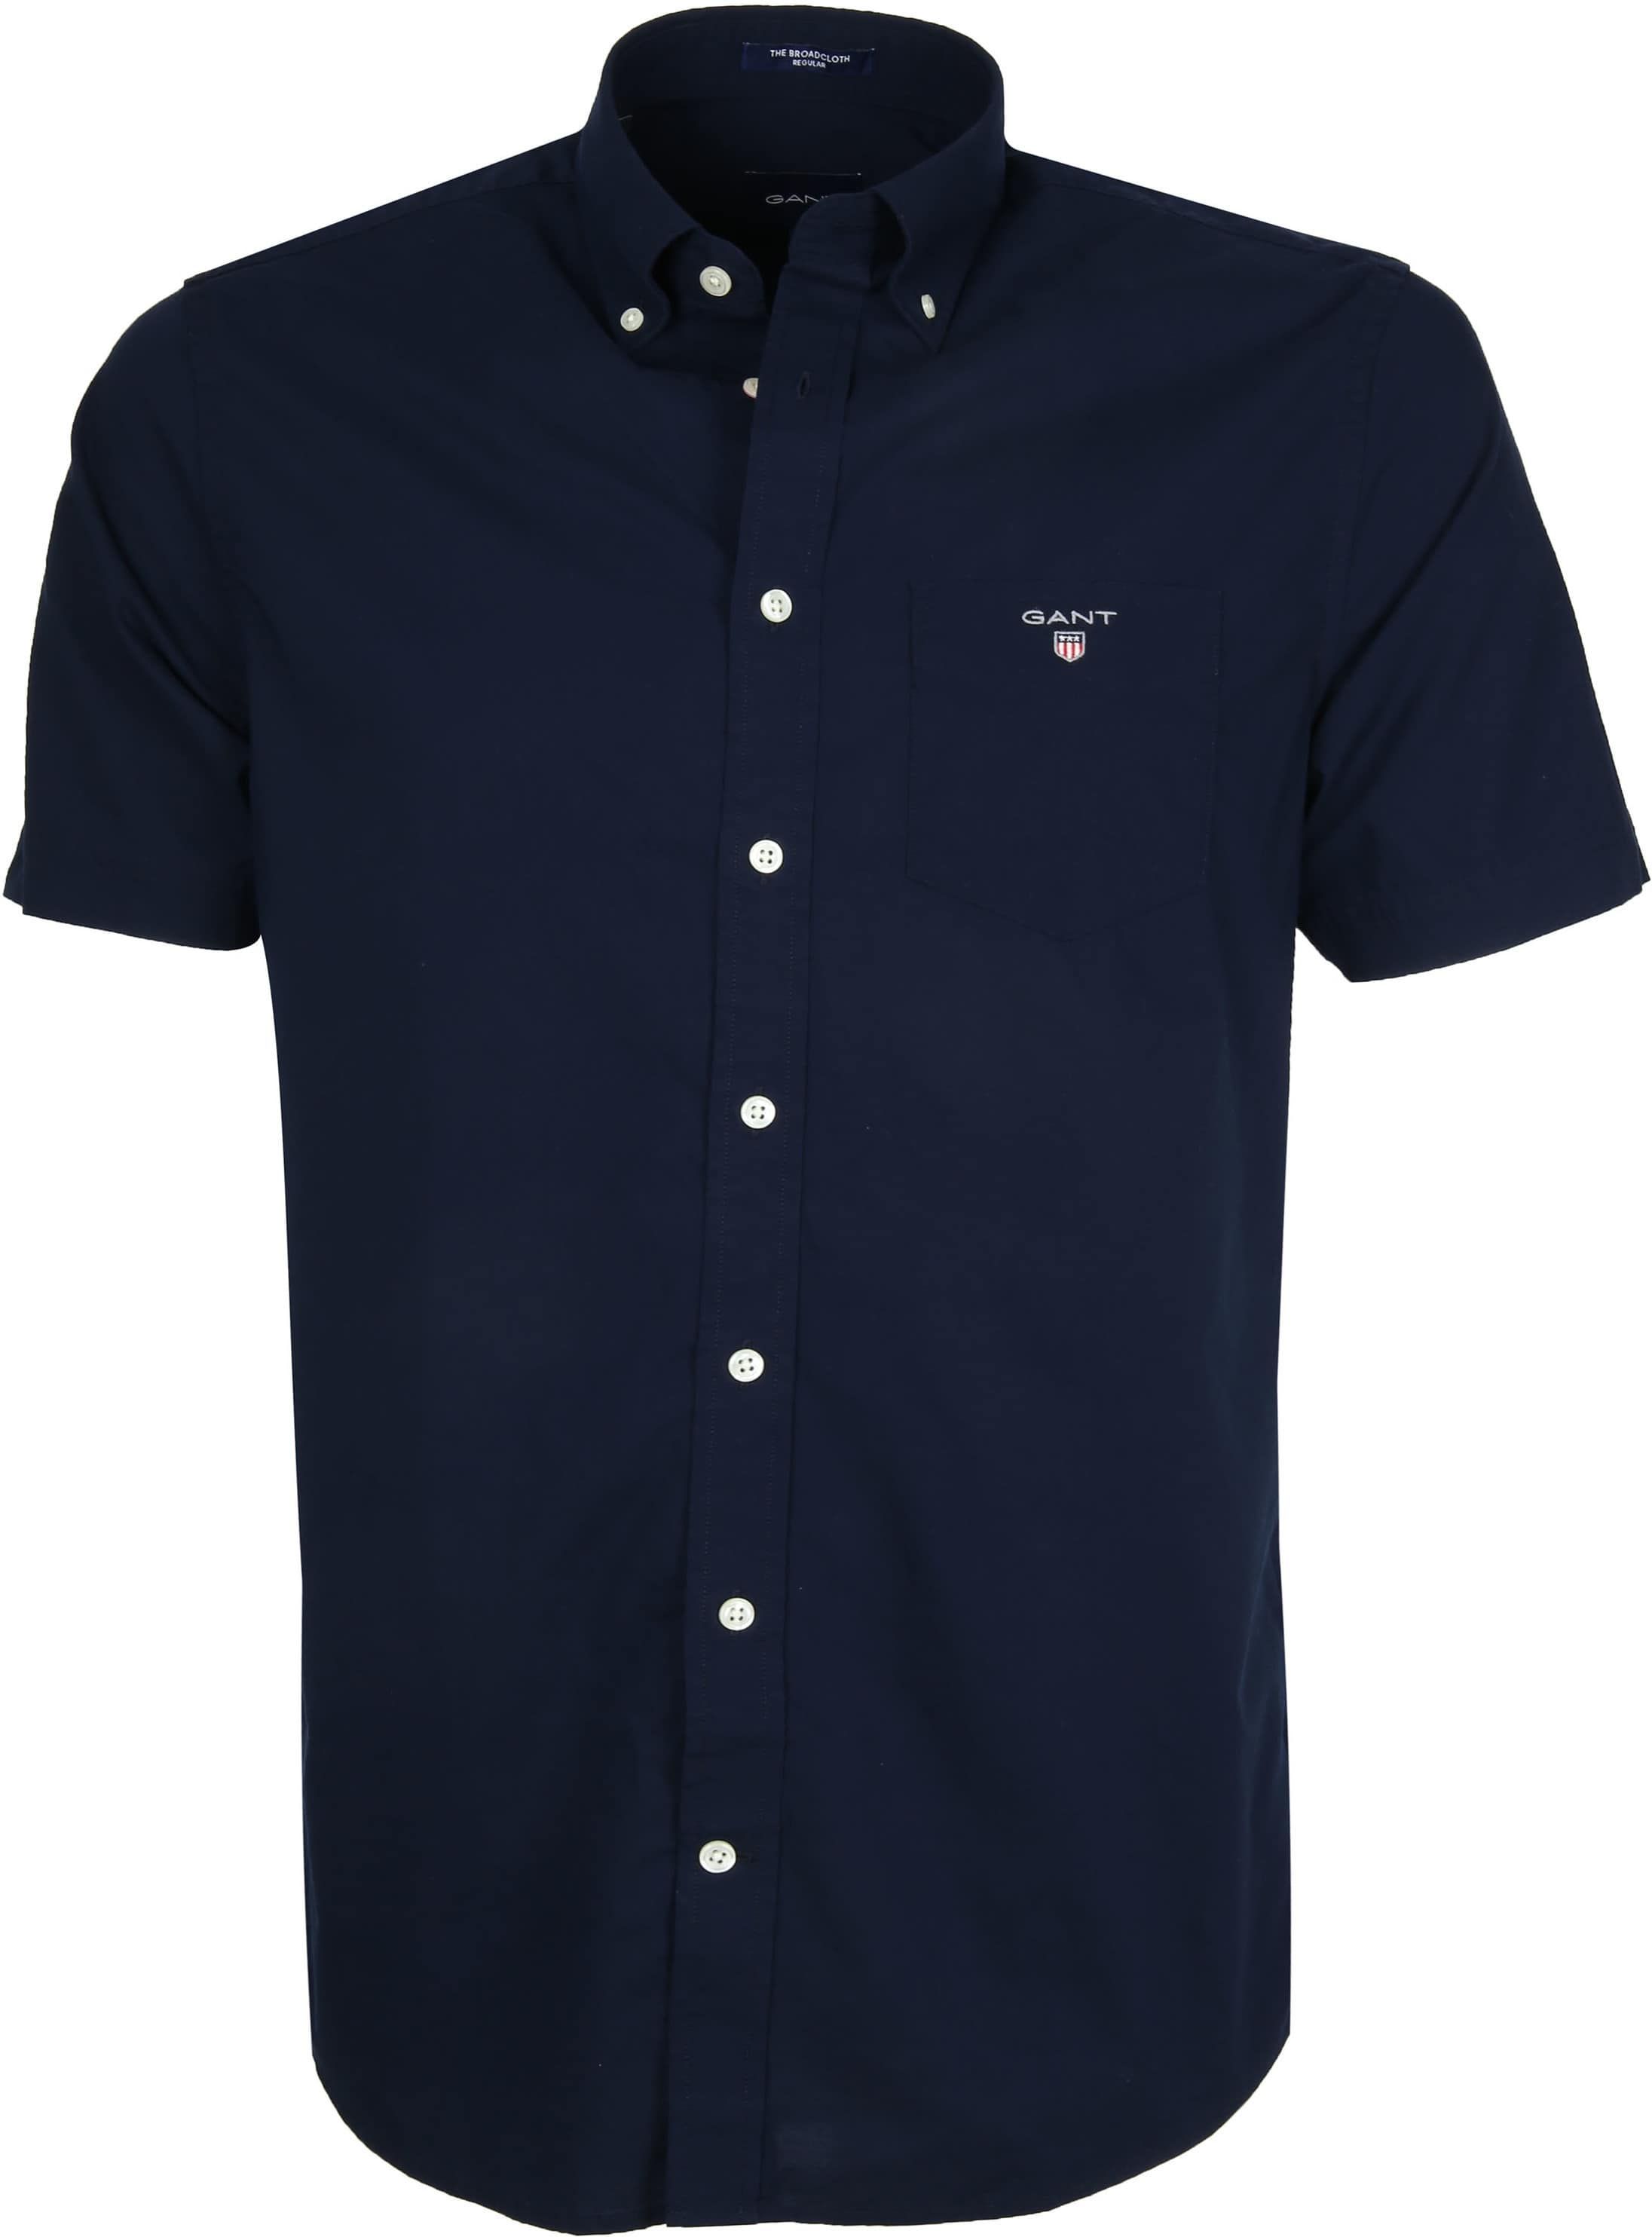 Gant Shirt Boradcloth Navy Dark Blue size L